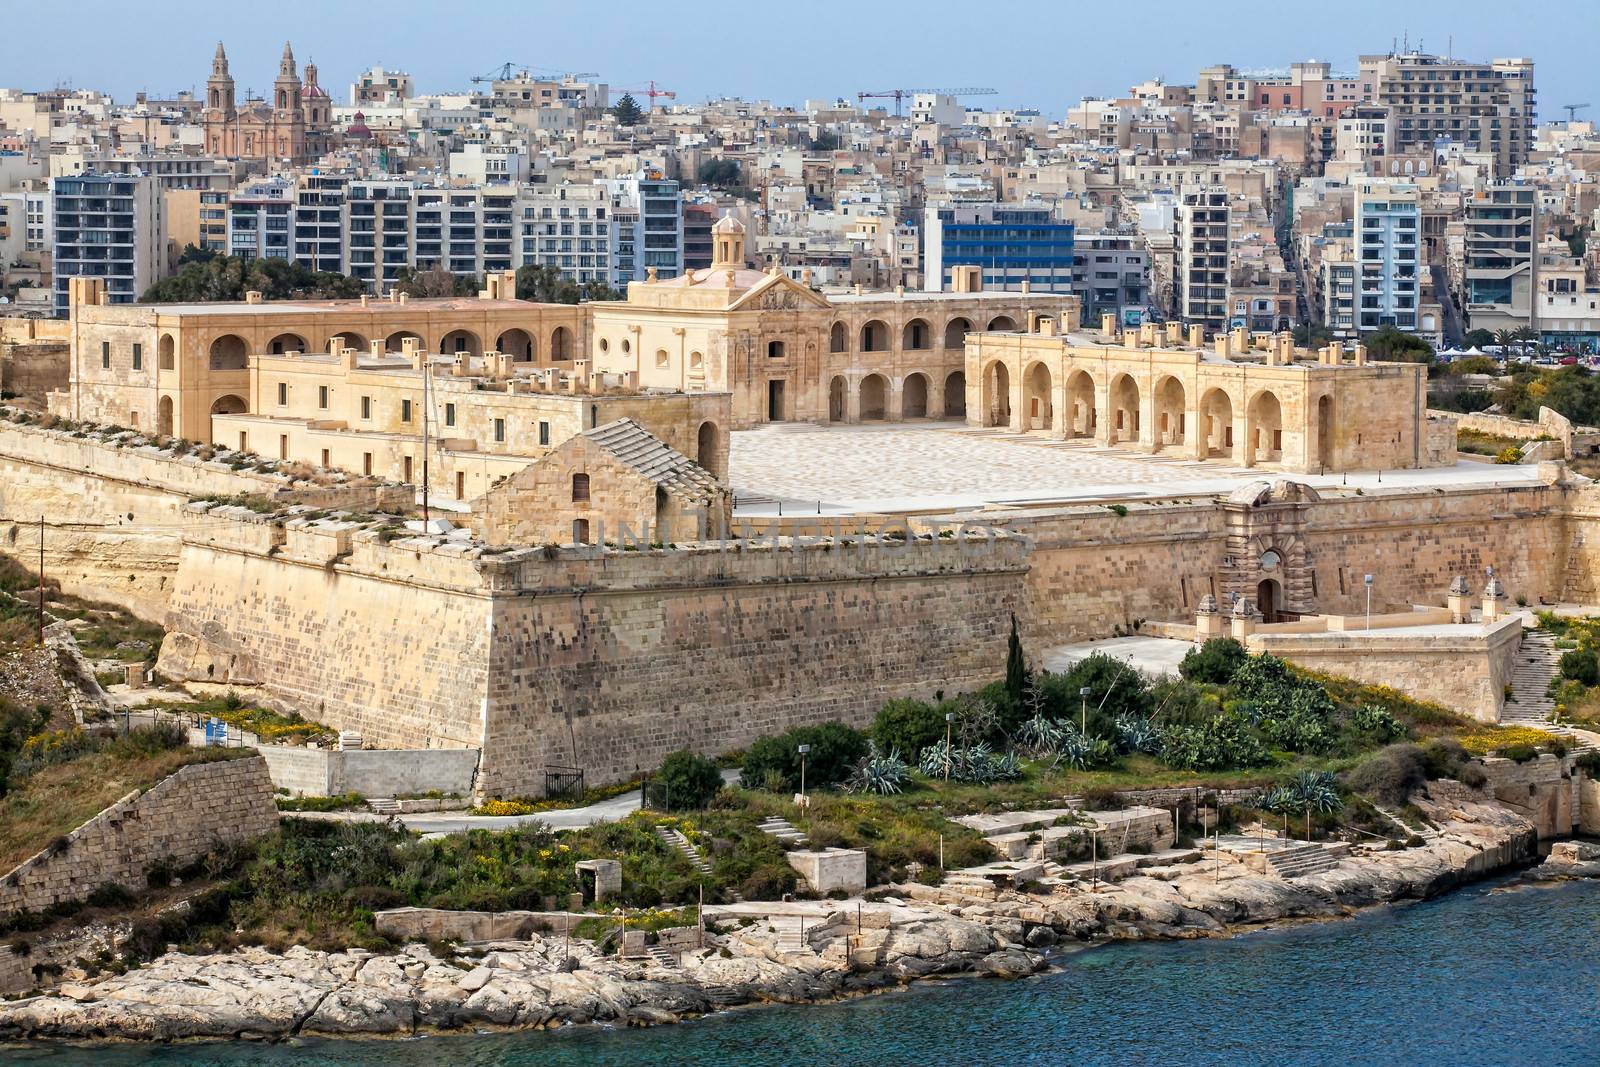 Fort Manoel as seen from Hastings Gardens in Valletta.